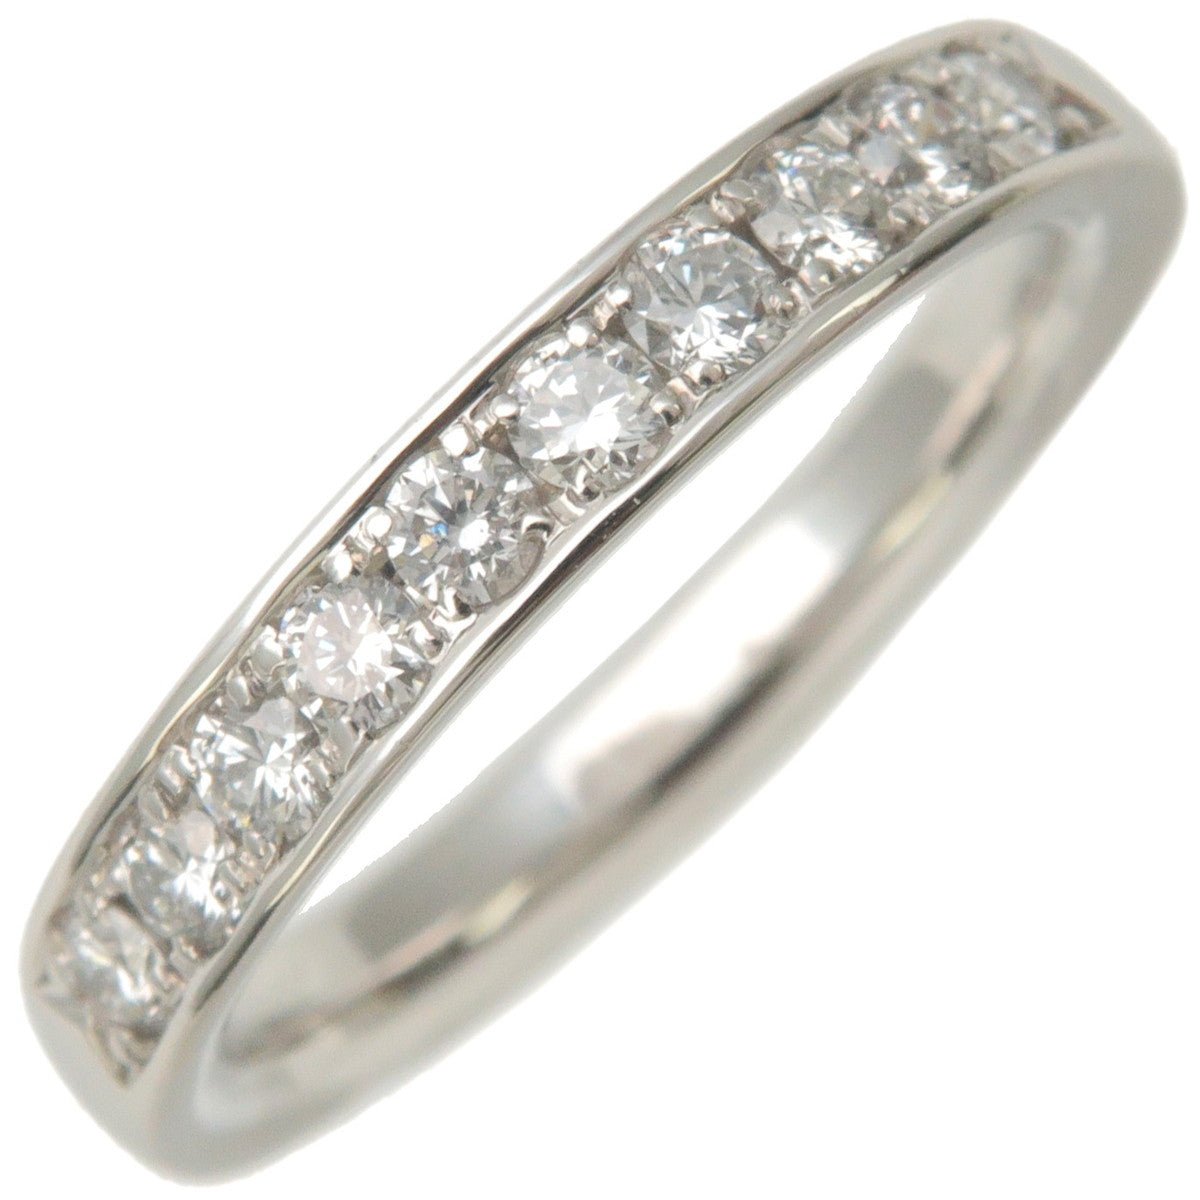 4℃-Half-Eternity-Diamond-Ring-950-Platinum-US3.5-4-HK7.5-EU46